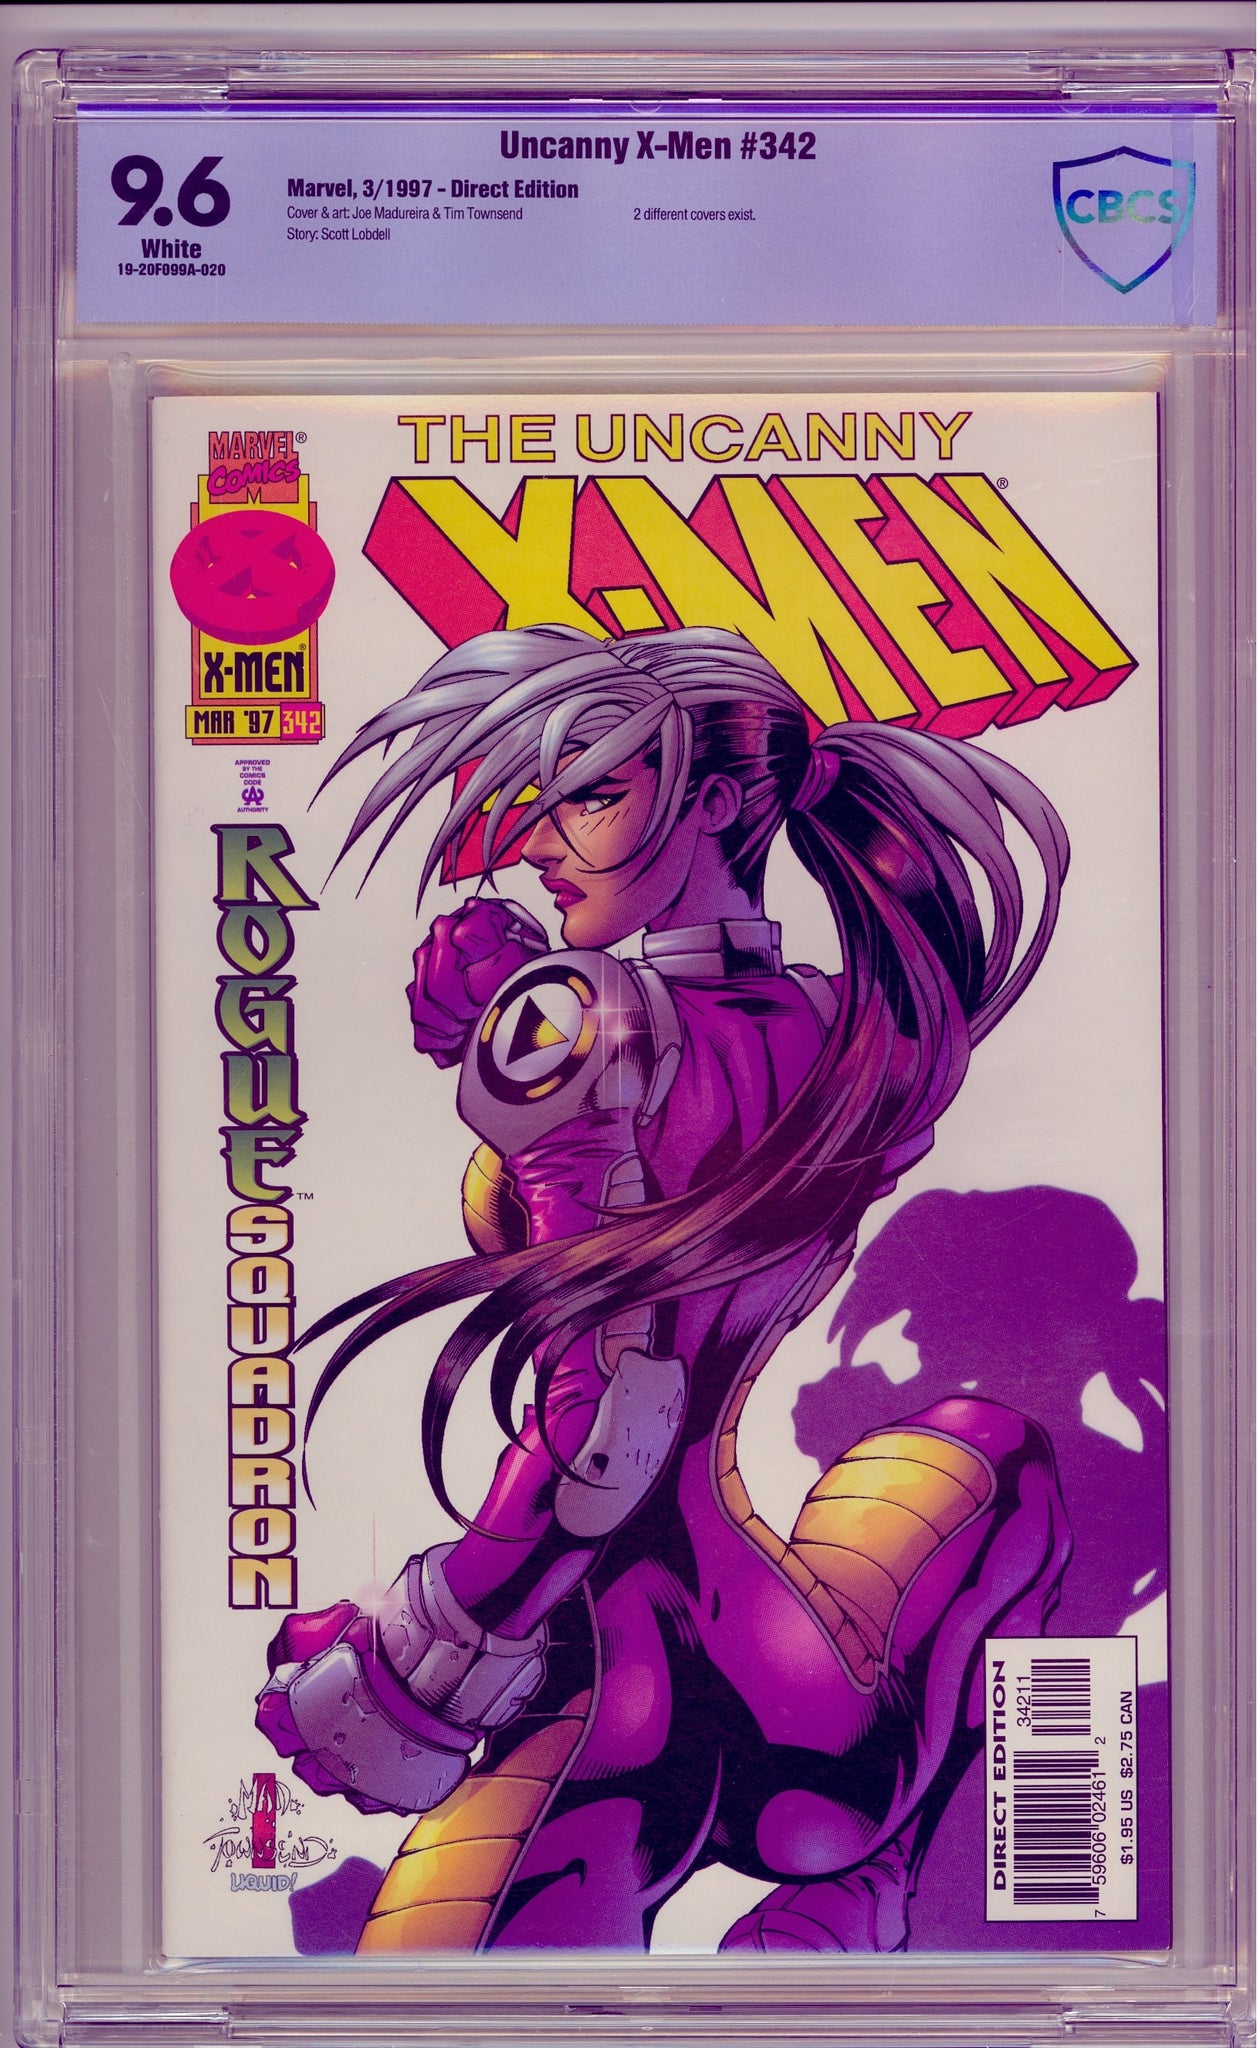 Uncanny X-Men #342 variant cover